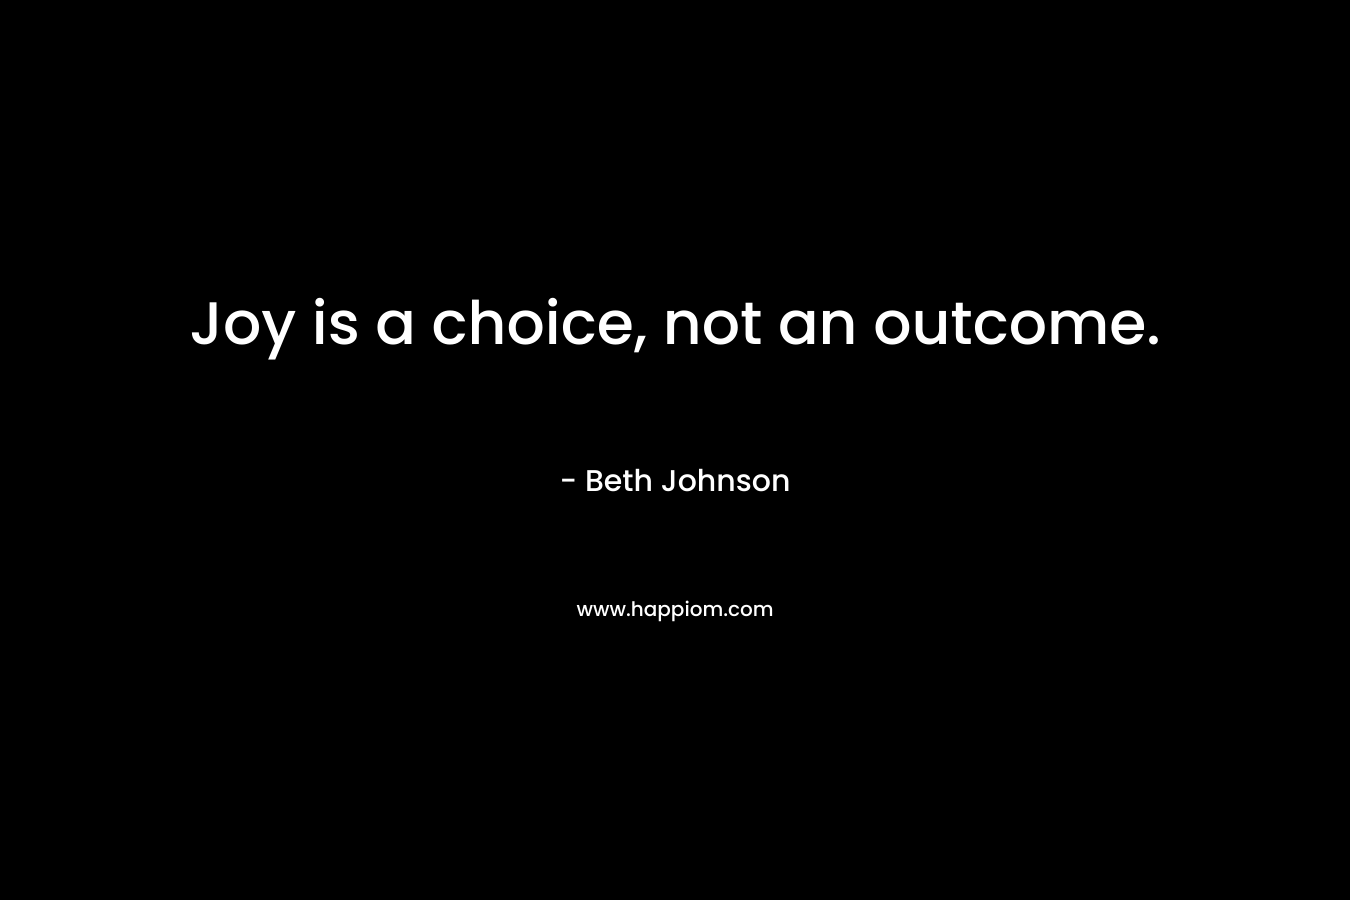 Joy is a choice, not an outcome.